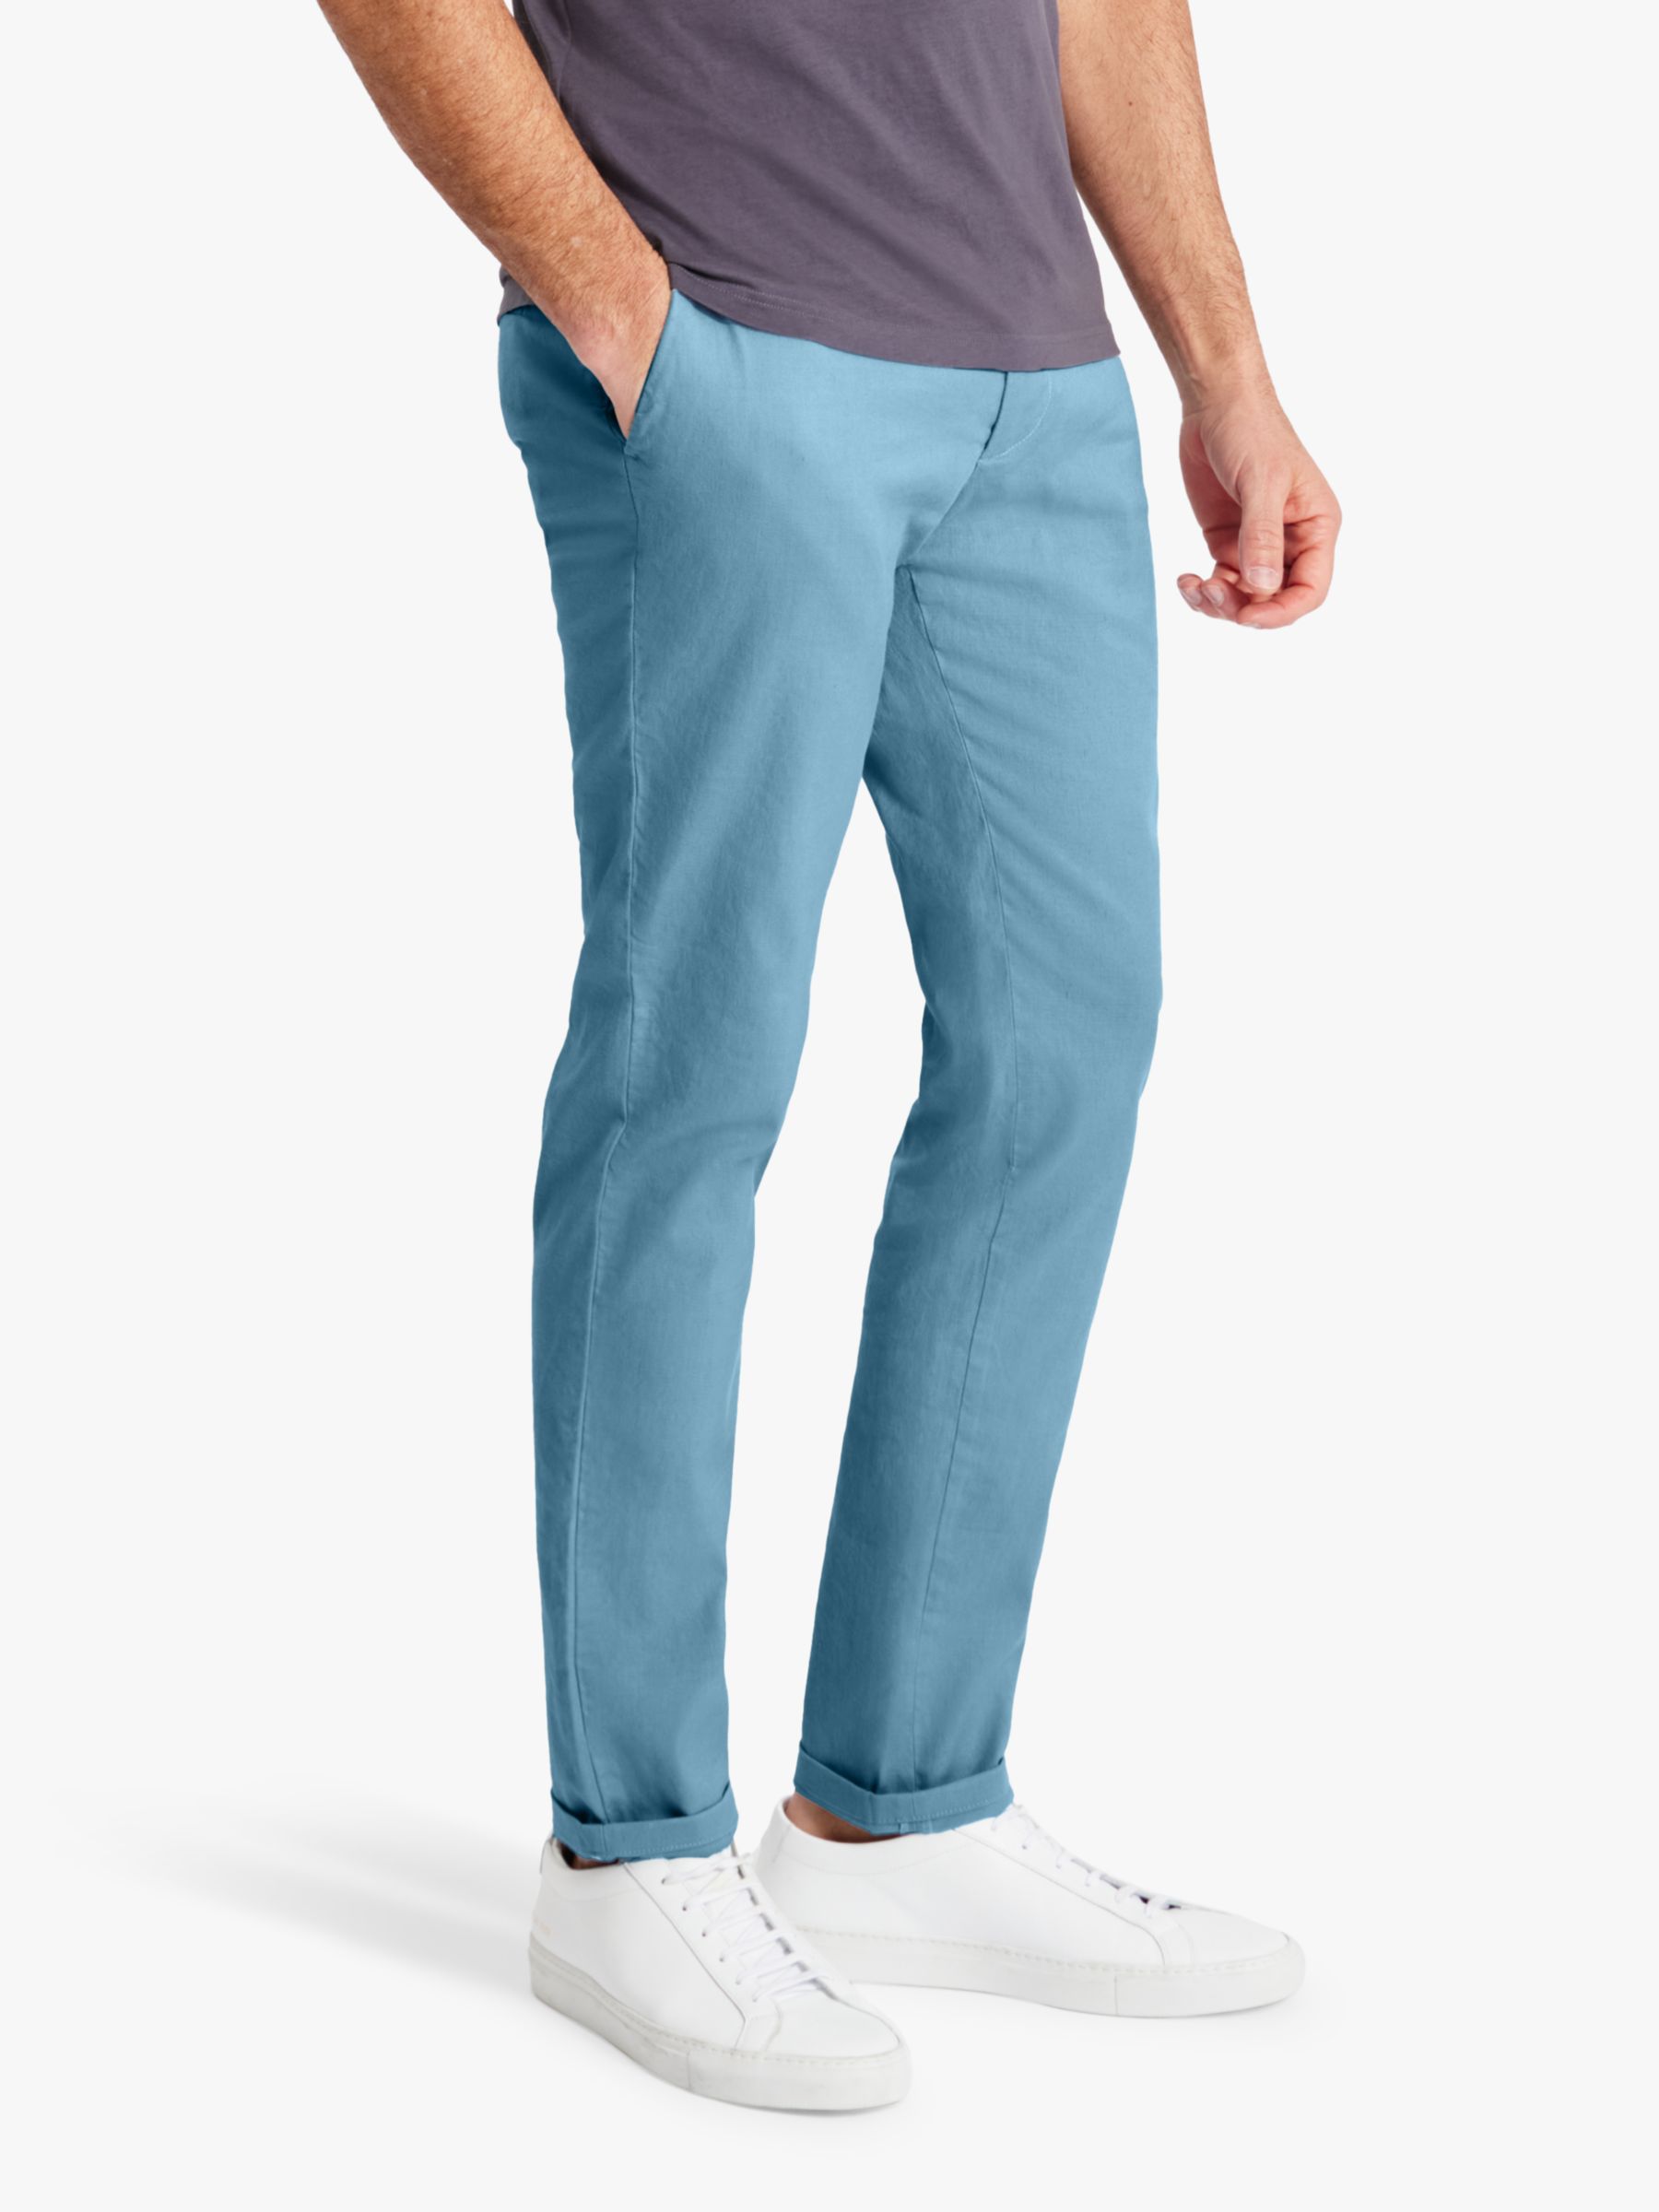 SPOKE Linen Sharps Slim Thigh Trousers, Aegean, W36/L34